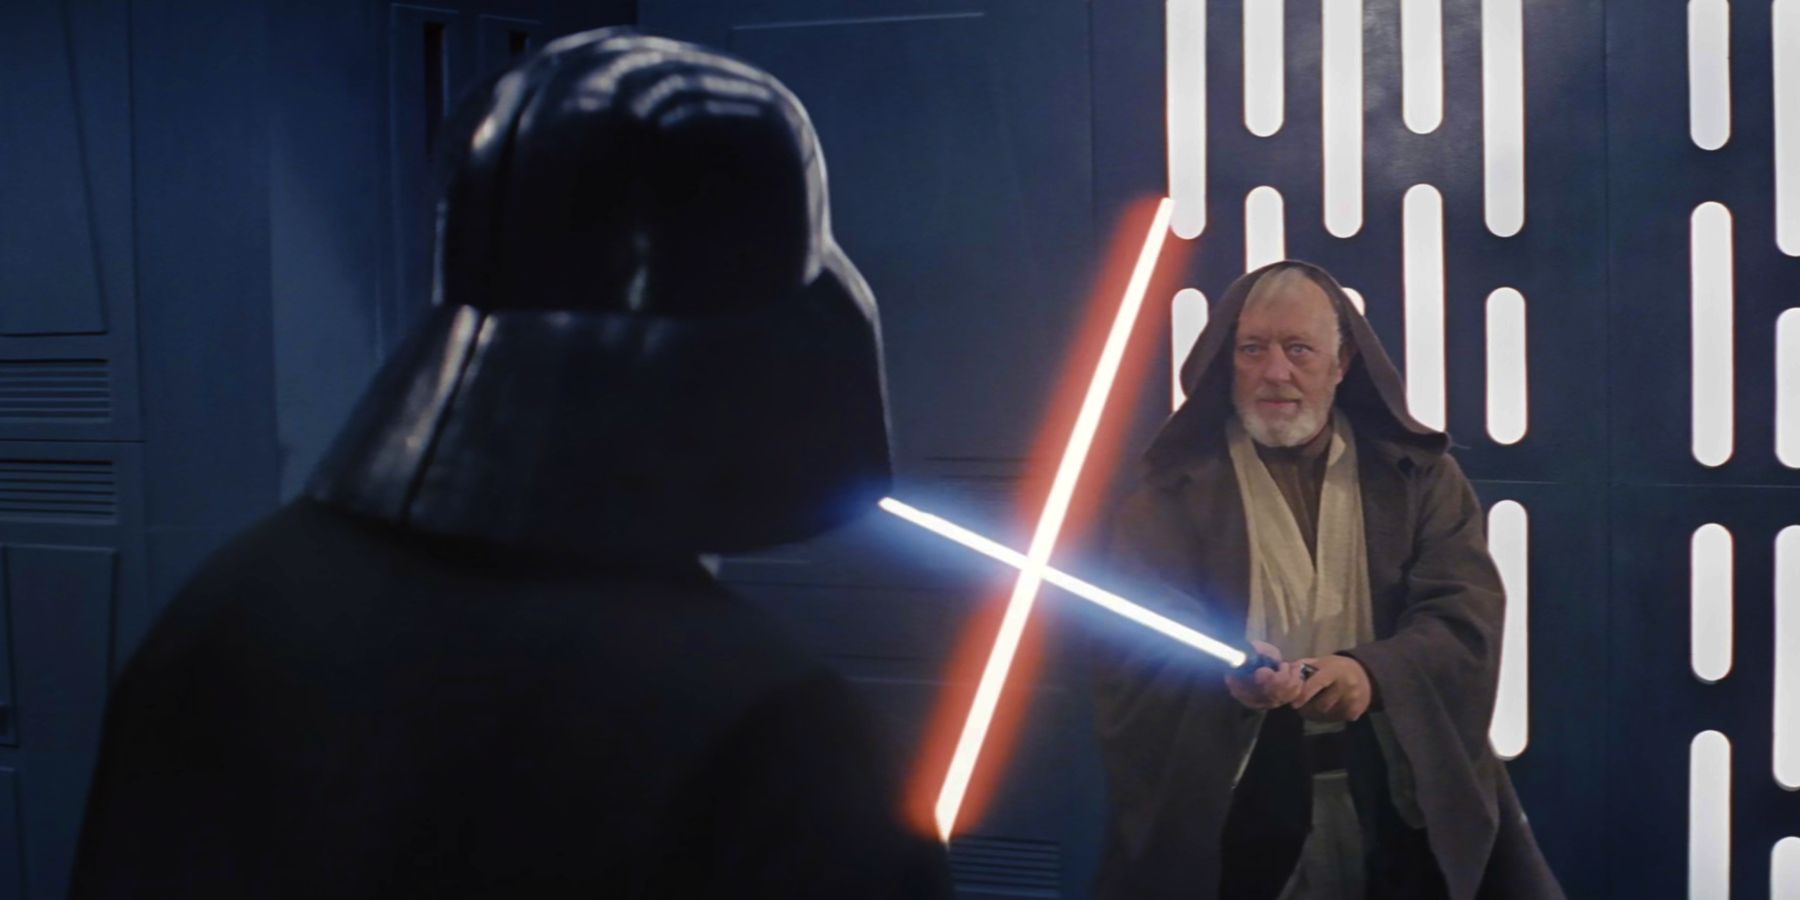 Obi-Wan Kenobi battling Darh Vader aboard the Death Star in Star Wars A New Hope